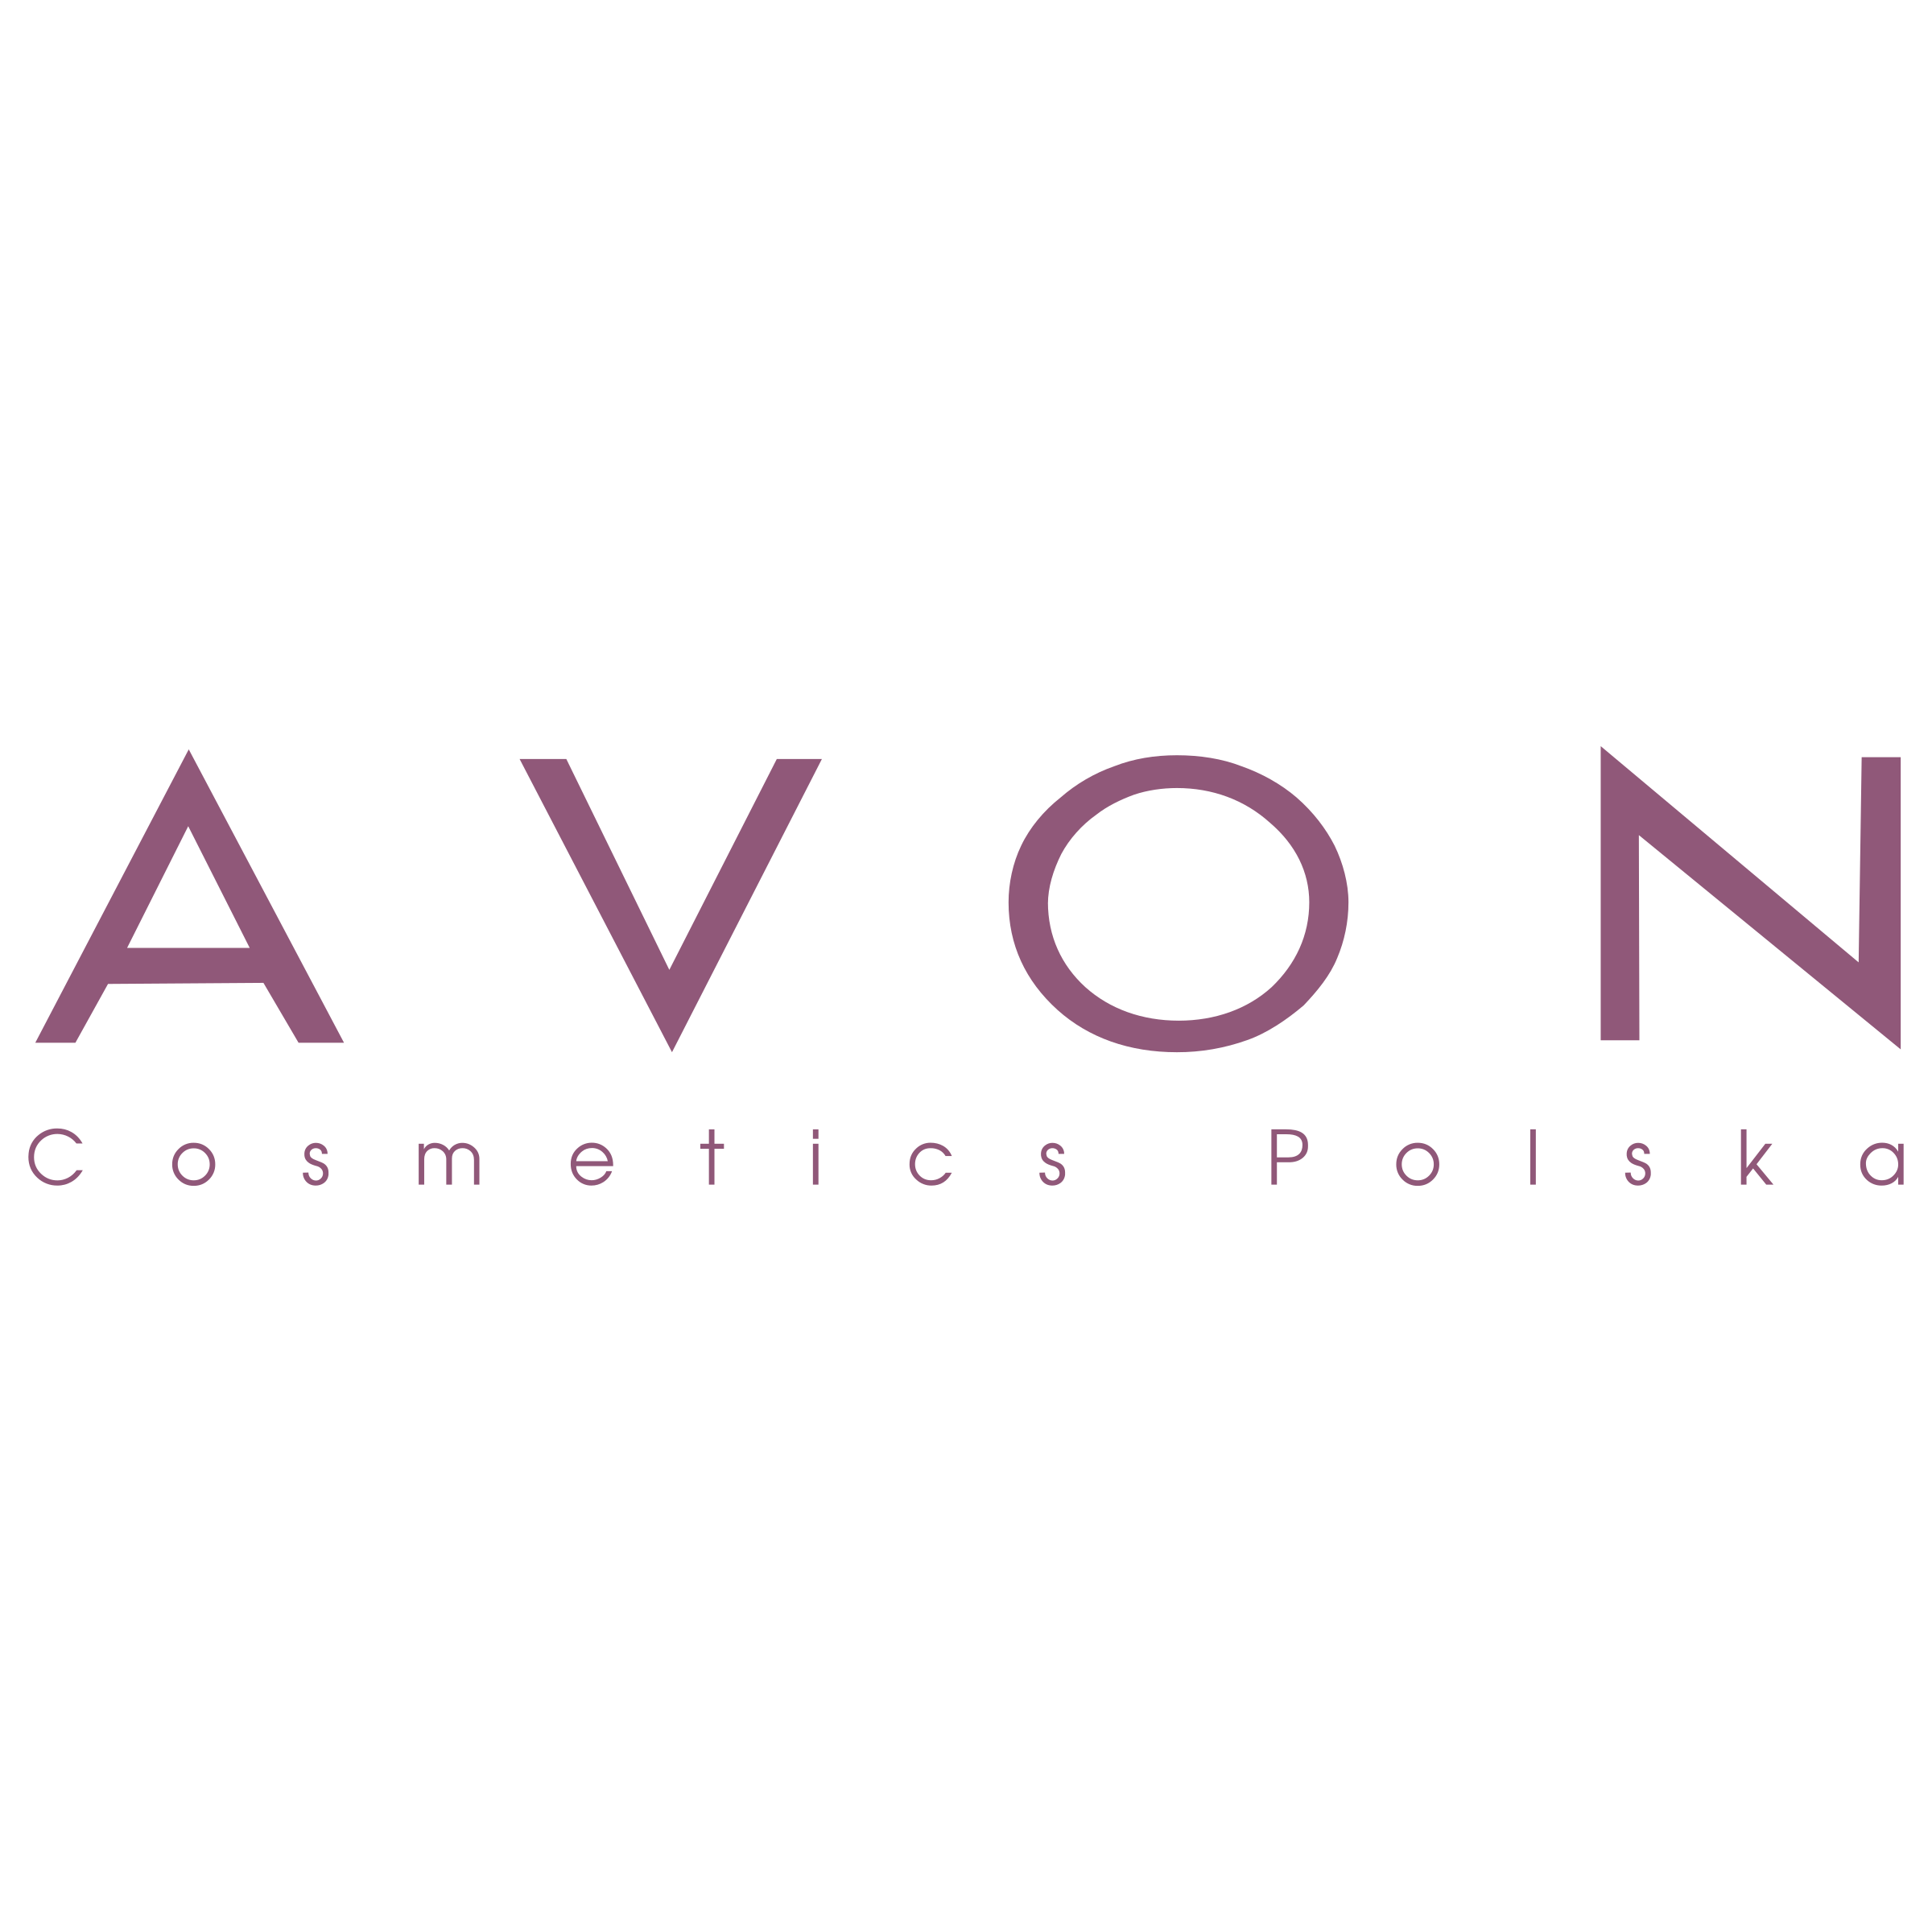 Avon Transparent Logo - Avon Cosmetics Polska Logo PNG Transparent & SVG Vector - Freebie Supply